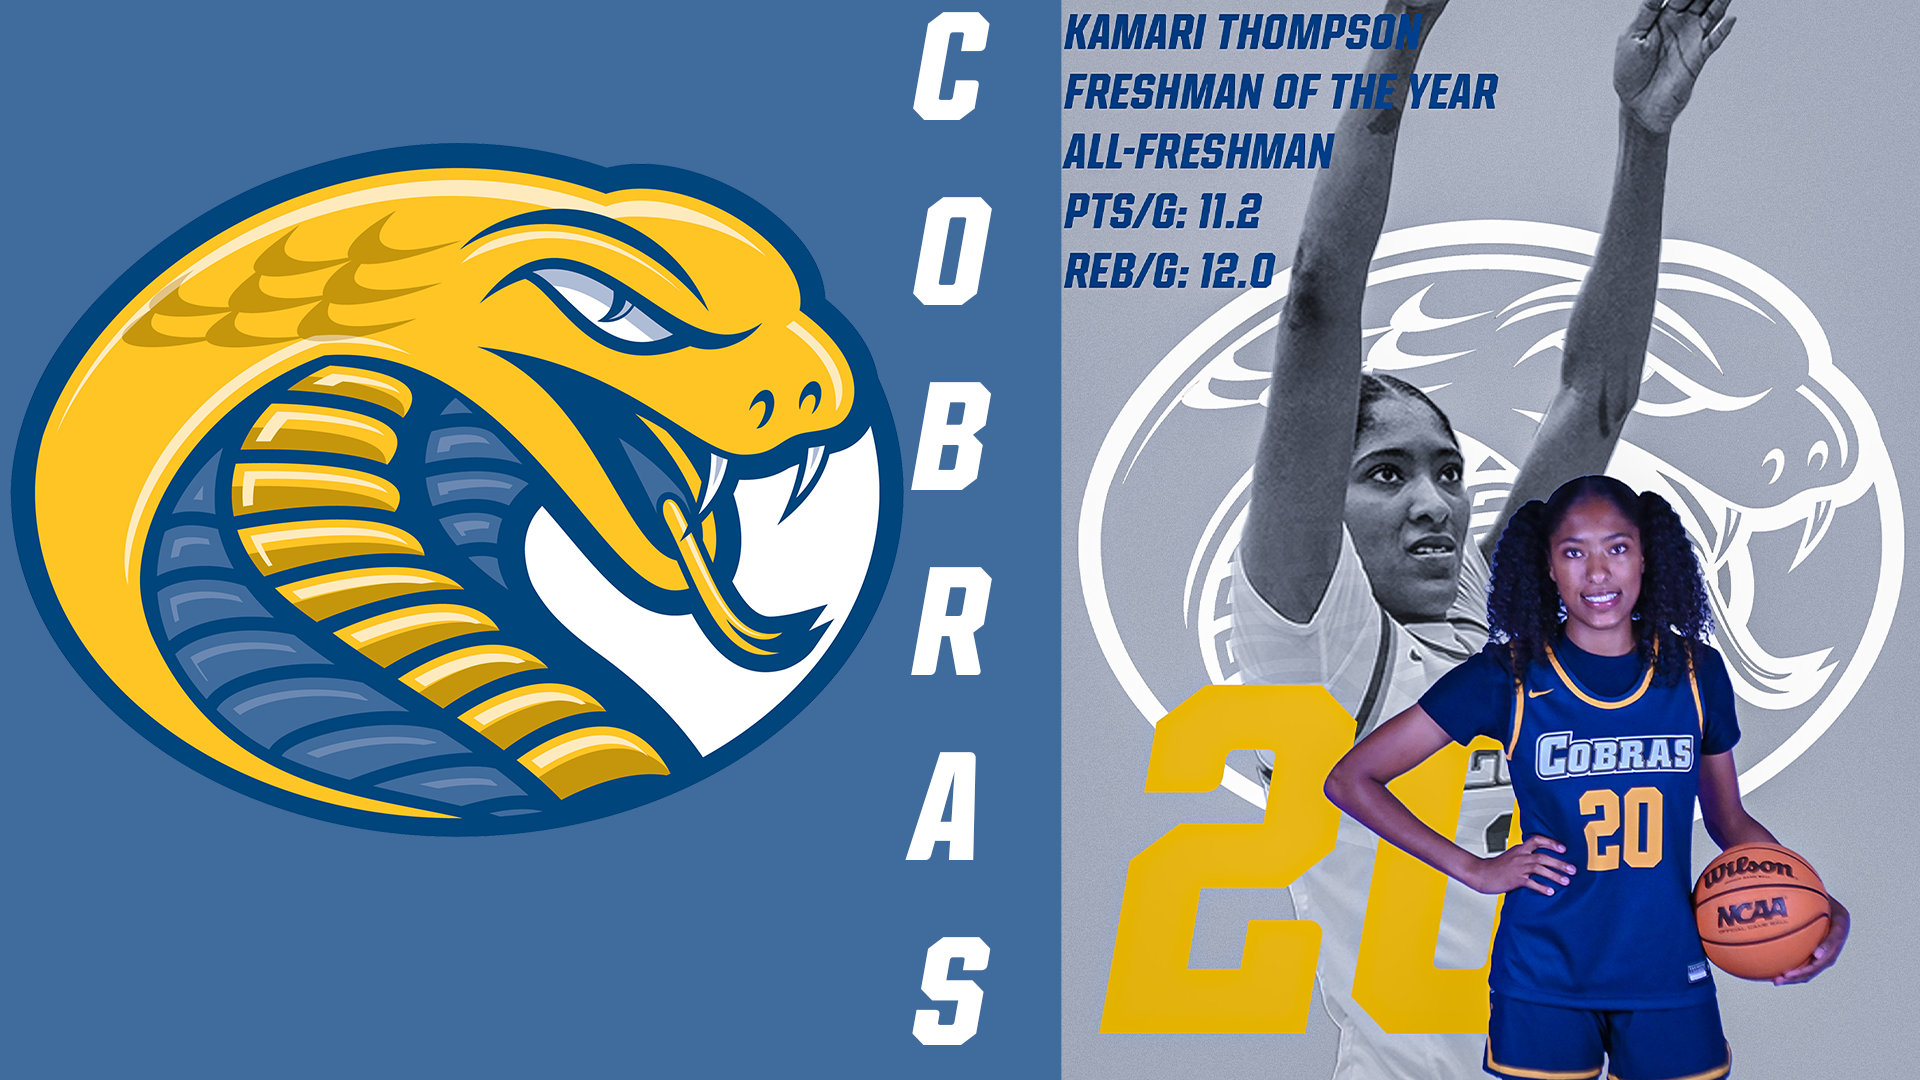 Kamari Thompson Earns All-Freshman & Freshman of the Year